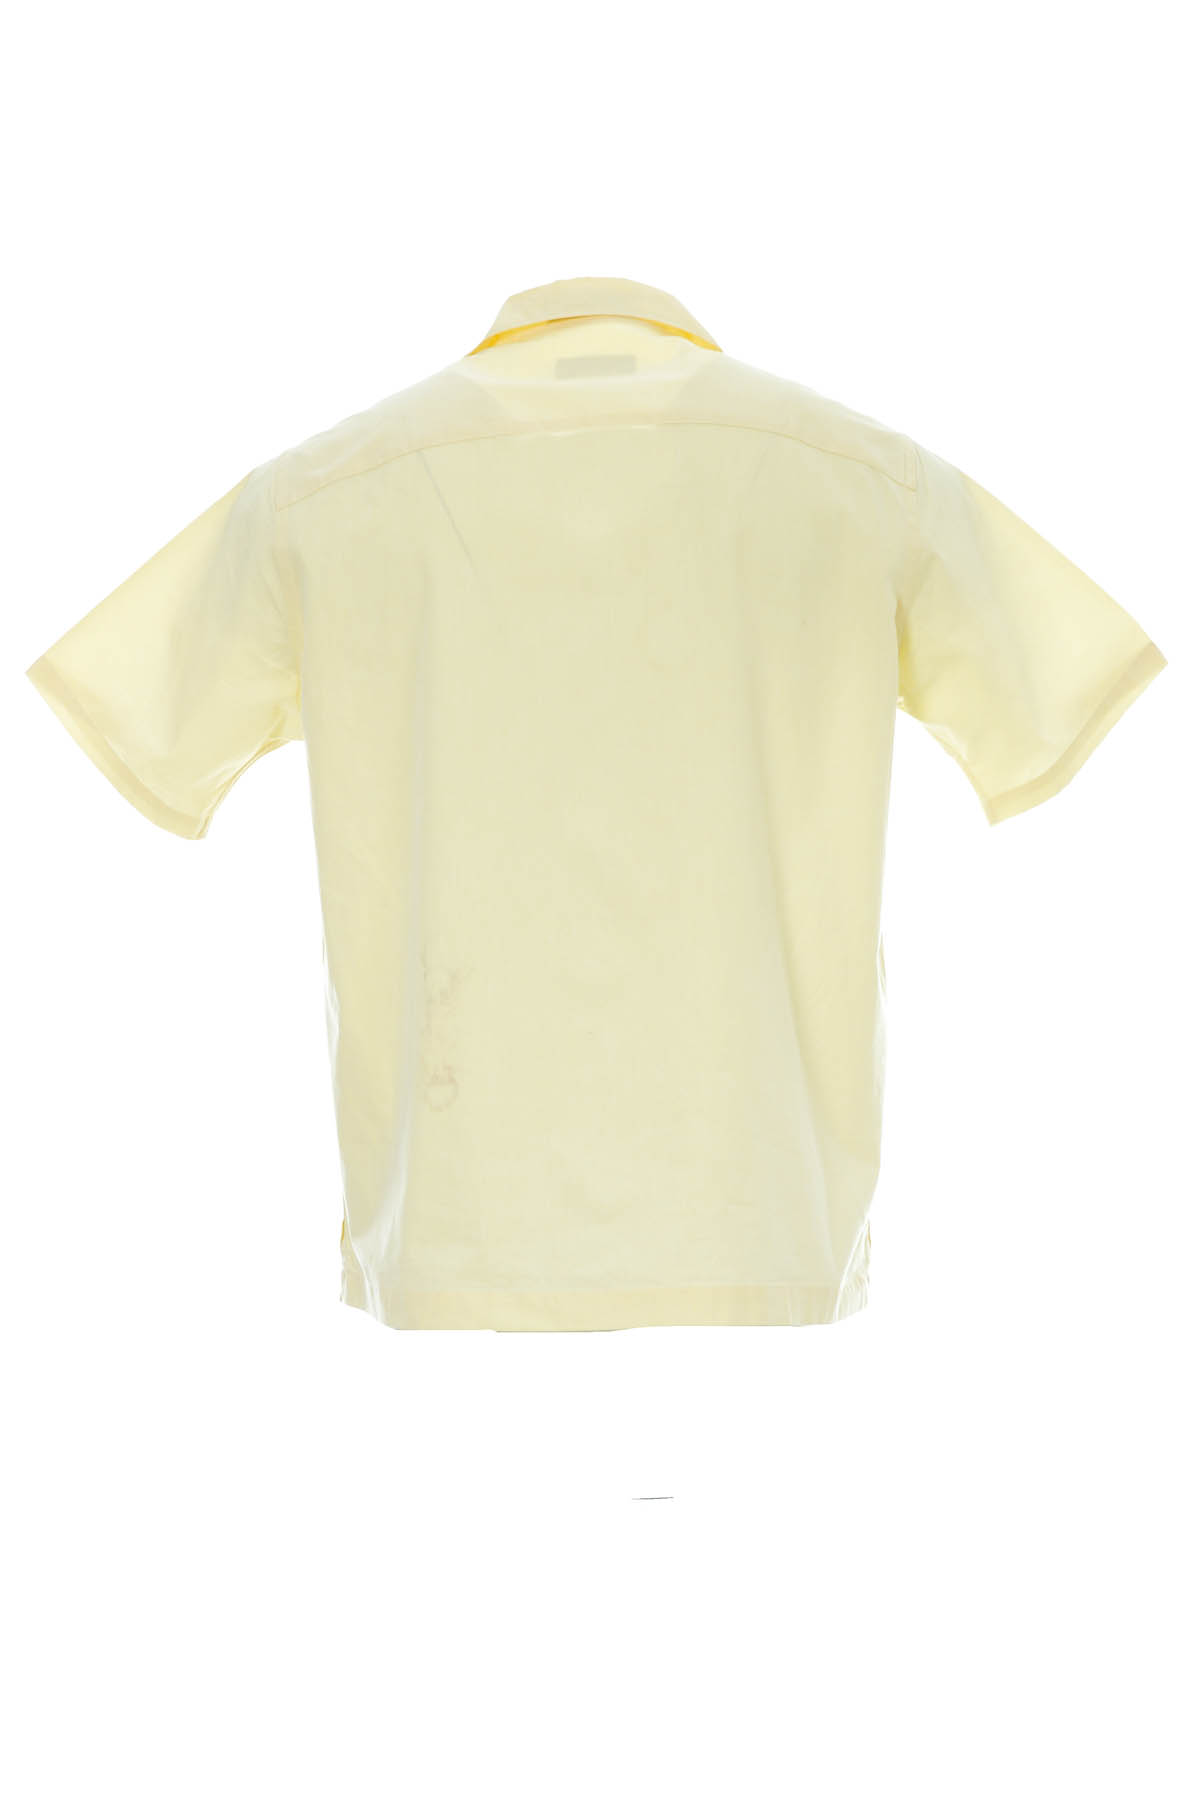 Men's shirt - clainborne - 1